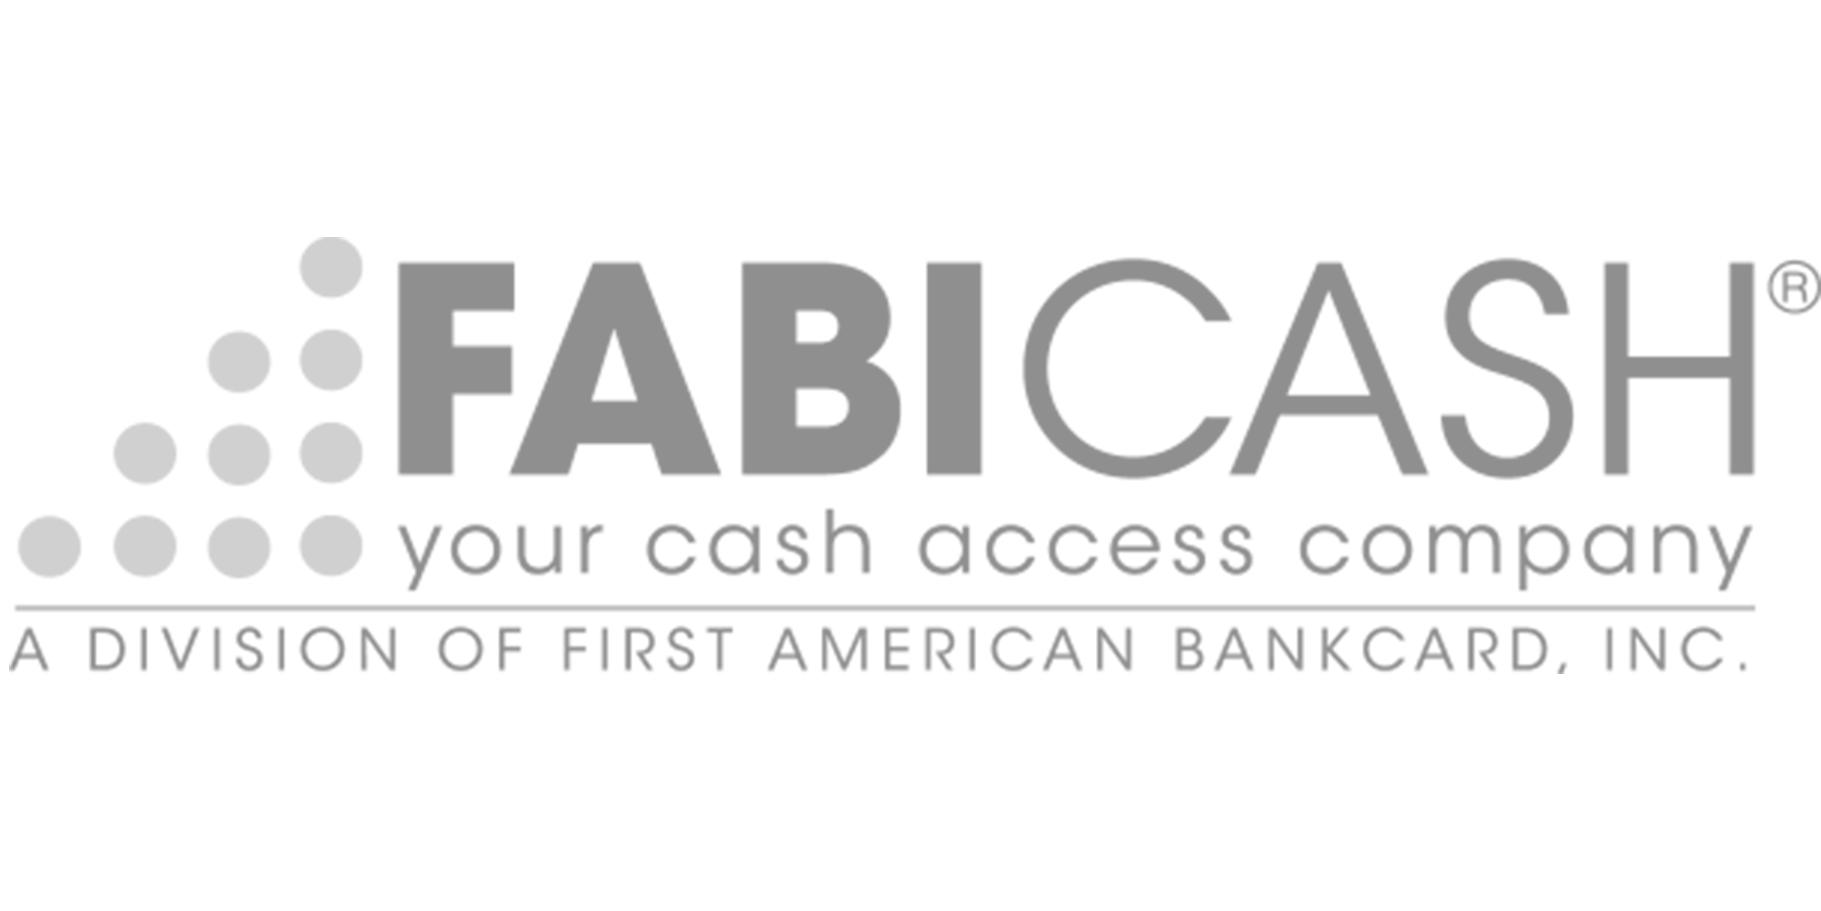 First American Bank Card, Inc.